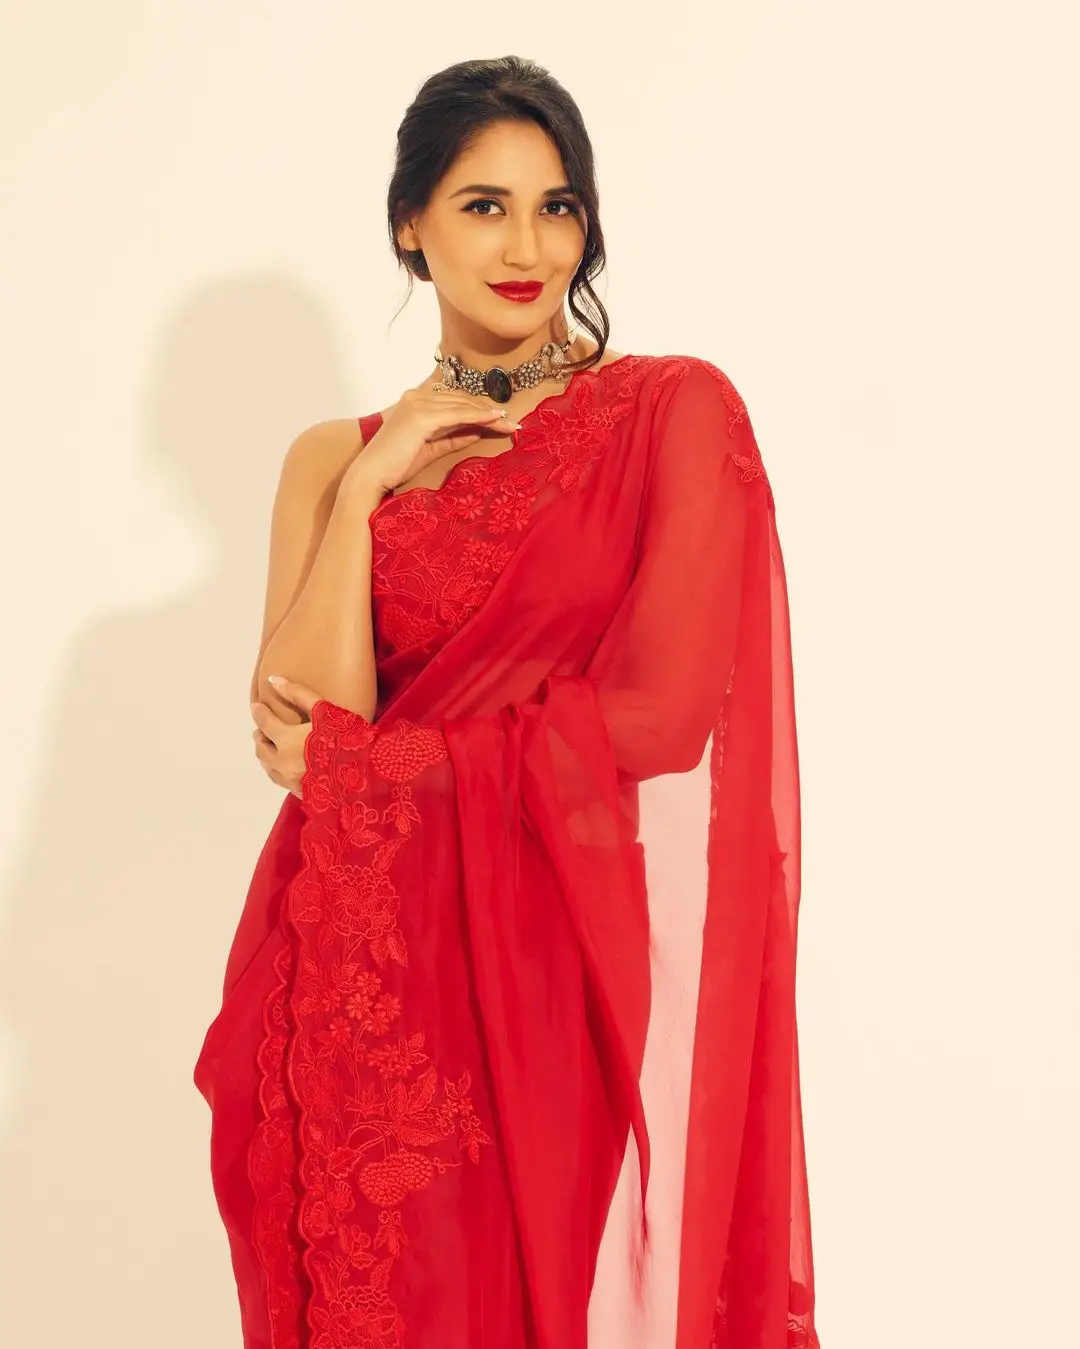 Bollywood Actress Nikita Dutta in Sleeveless Red Saree